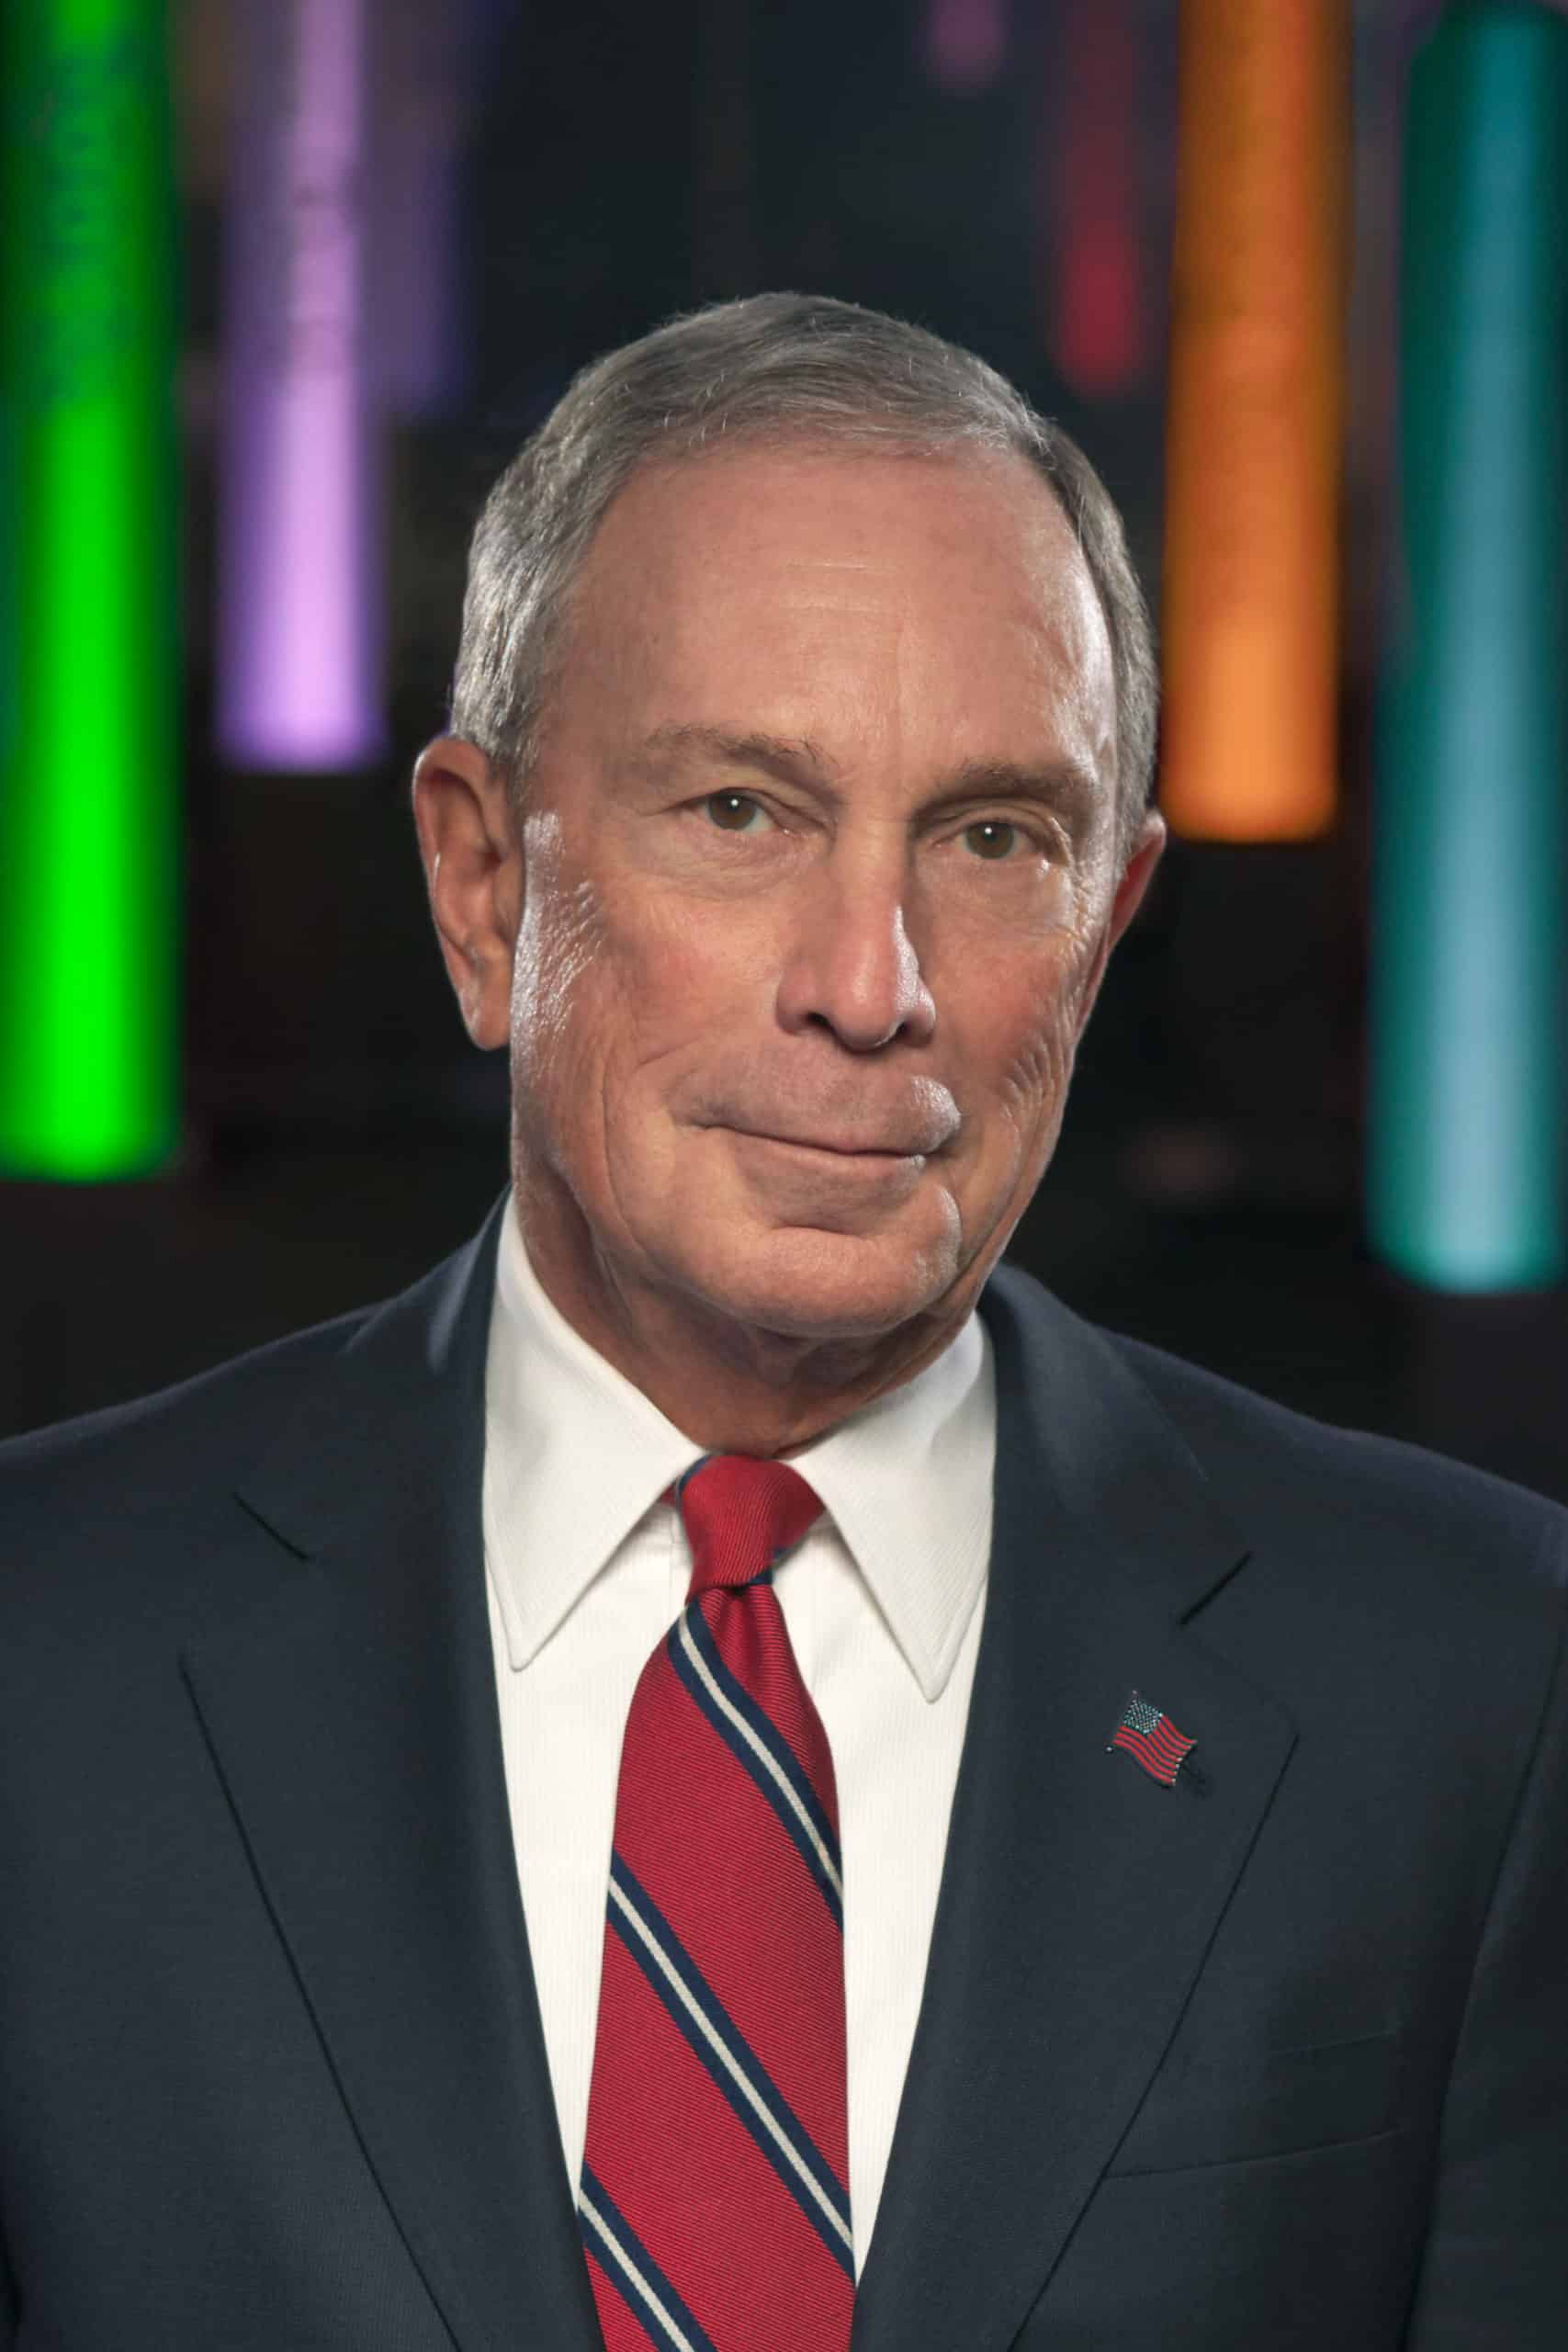 Michael Bloomberg net worth